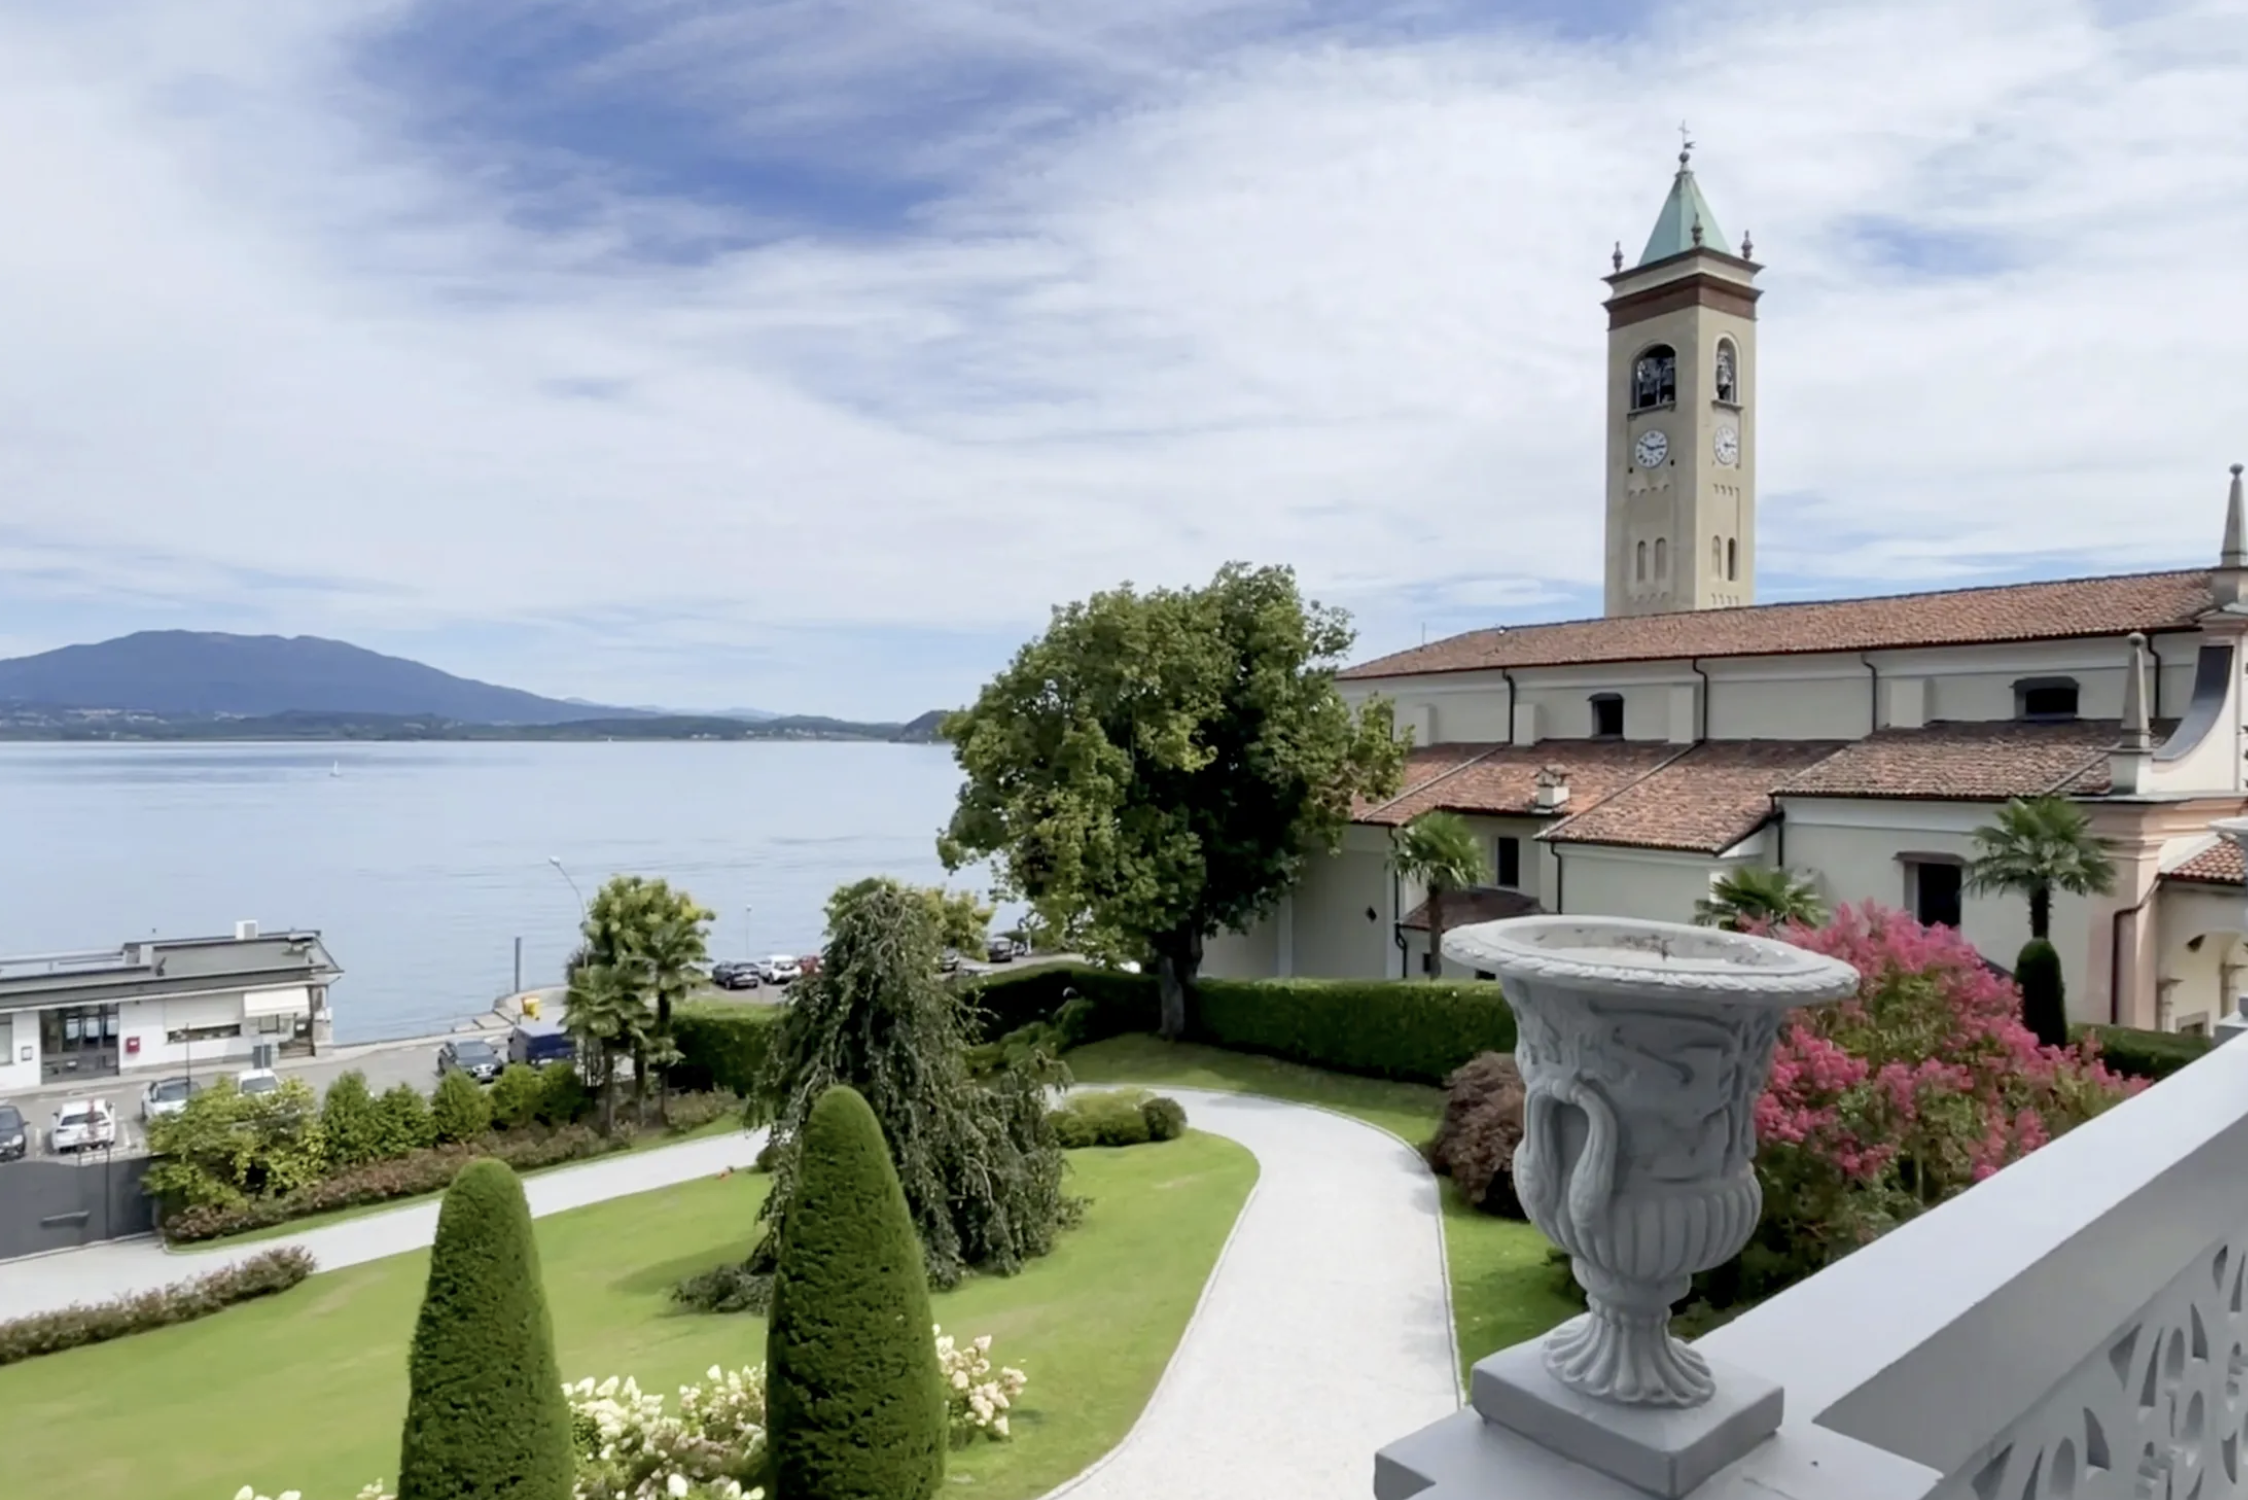 Francis York Art Nouveau Villa on Lake Maggiore, Italy 00004.png